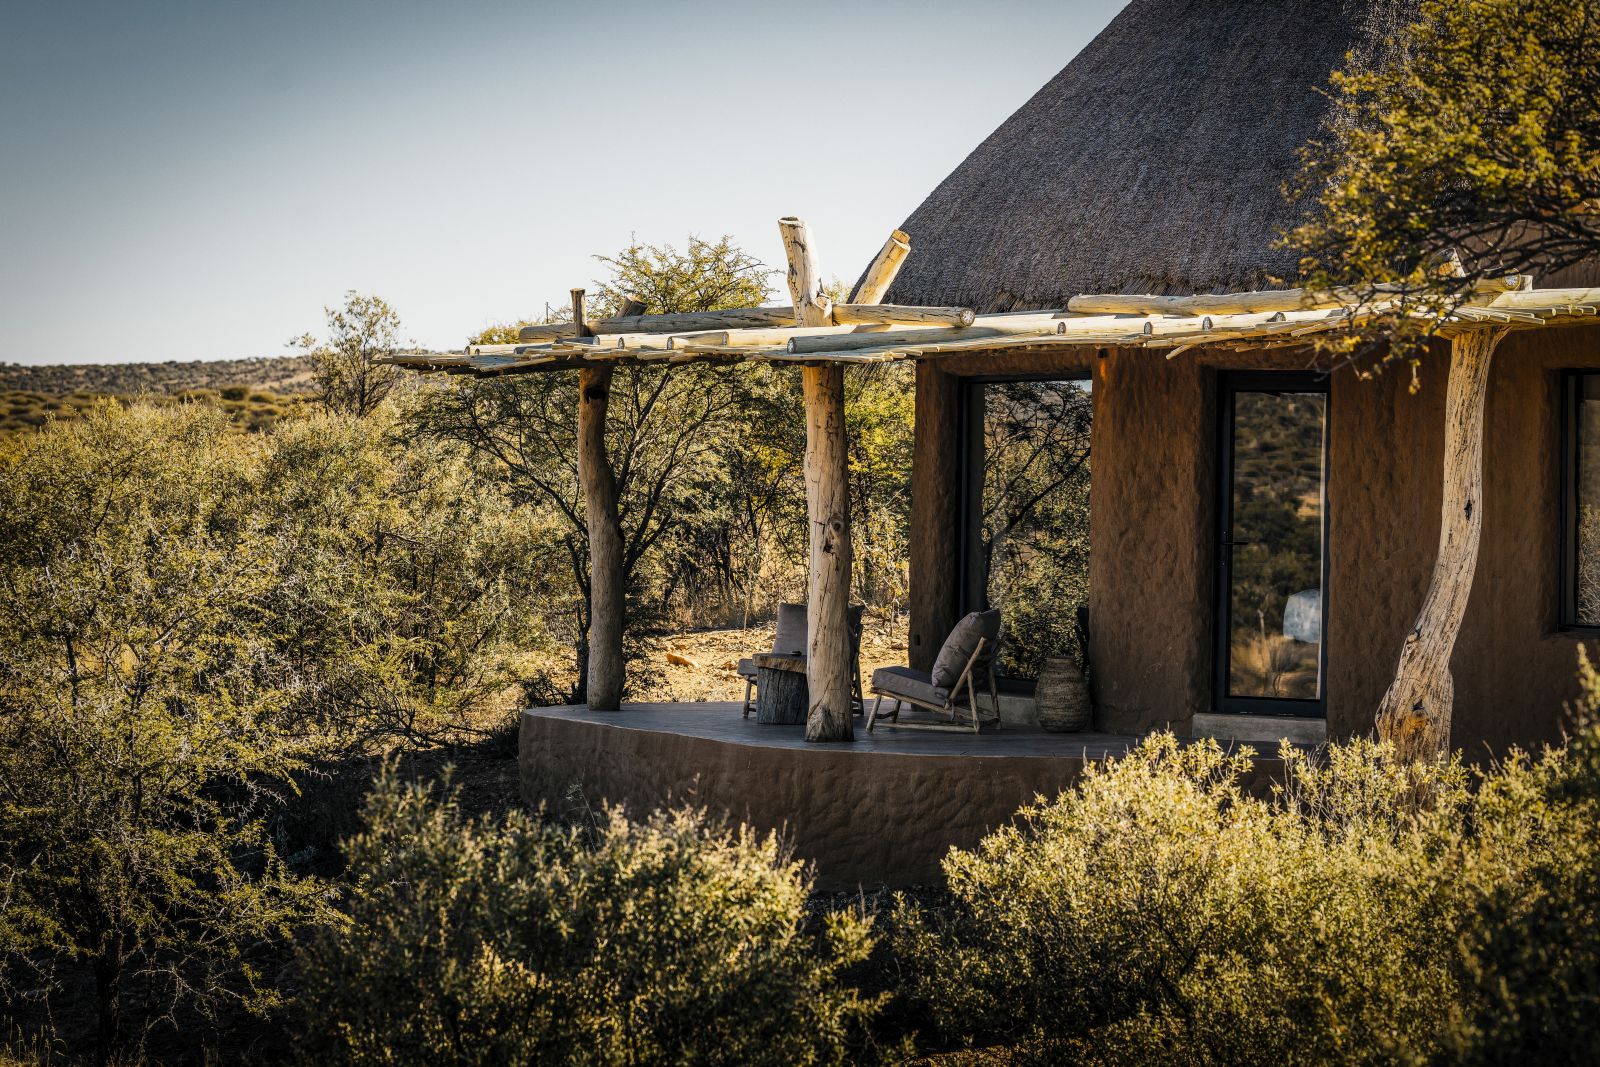 Hut 9 at Omaanda in Namibia